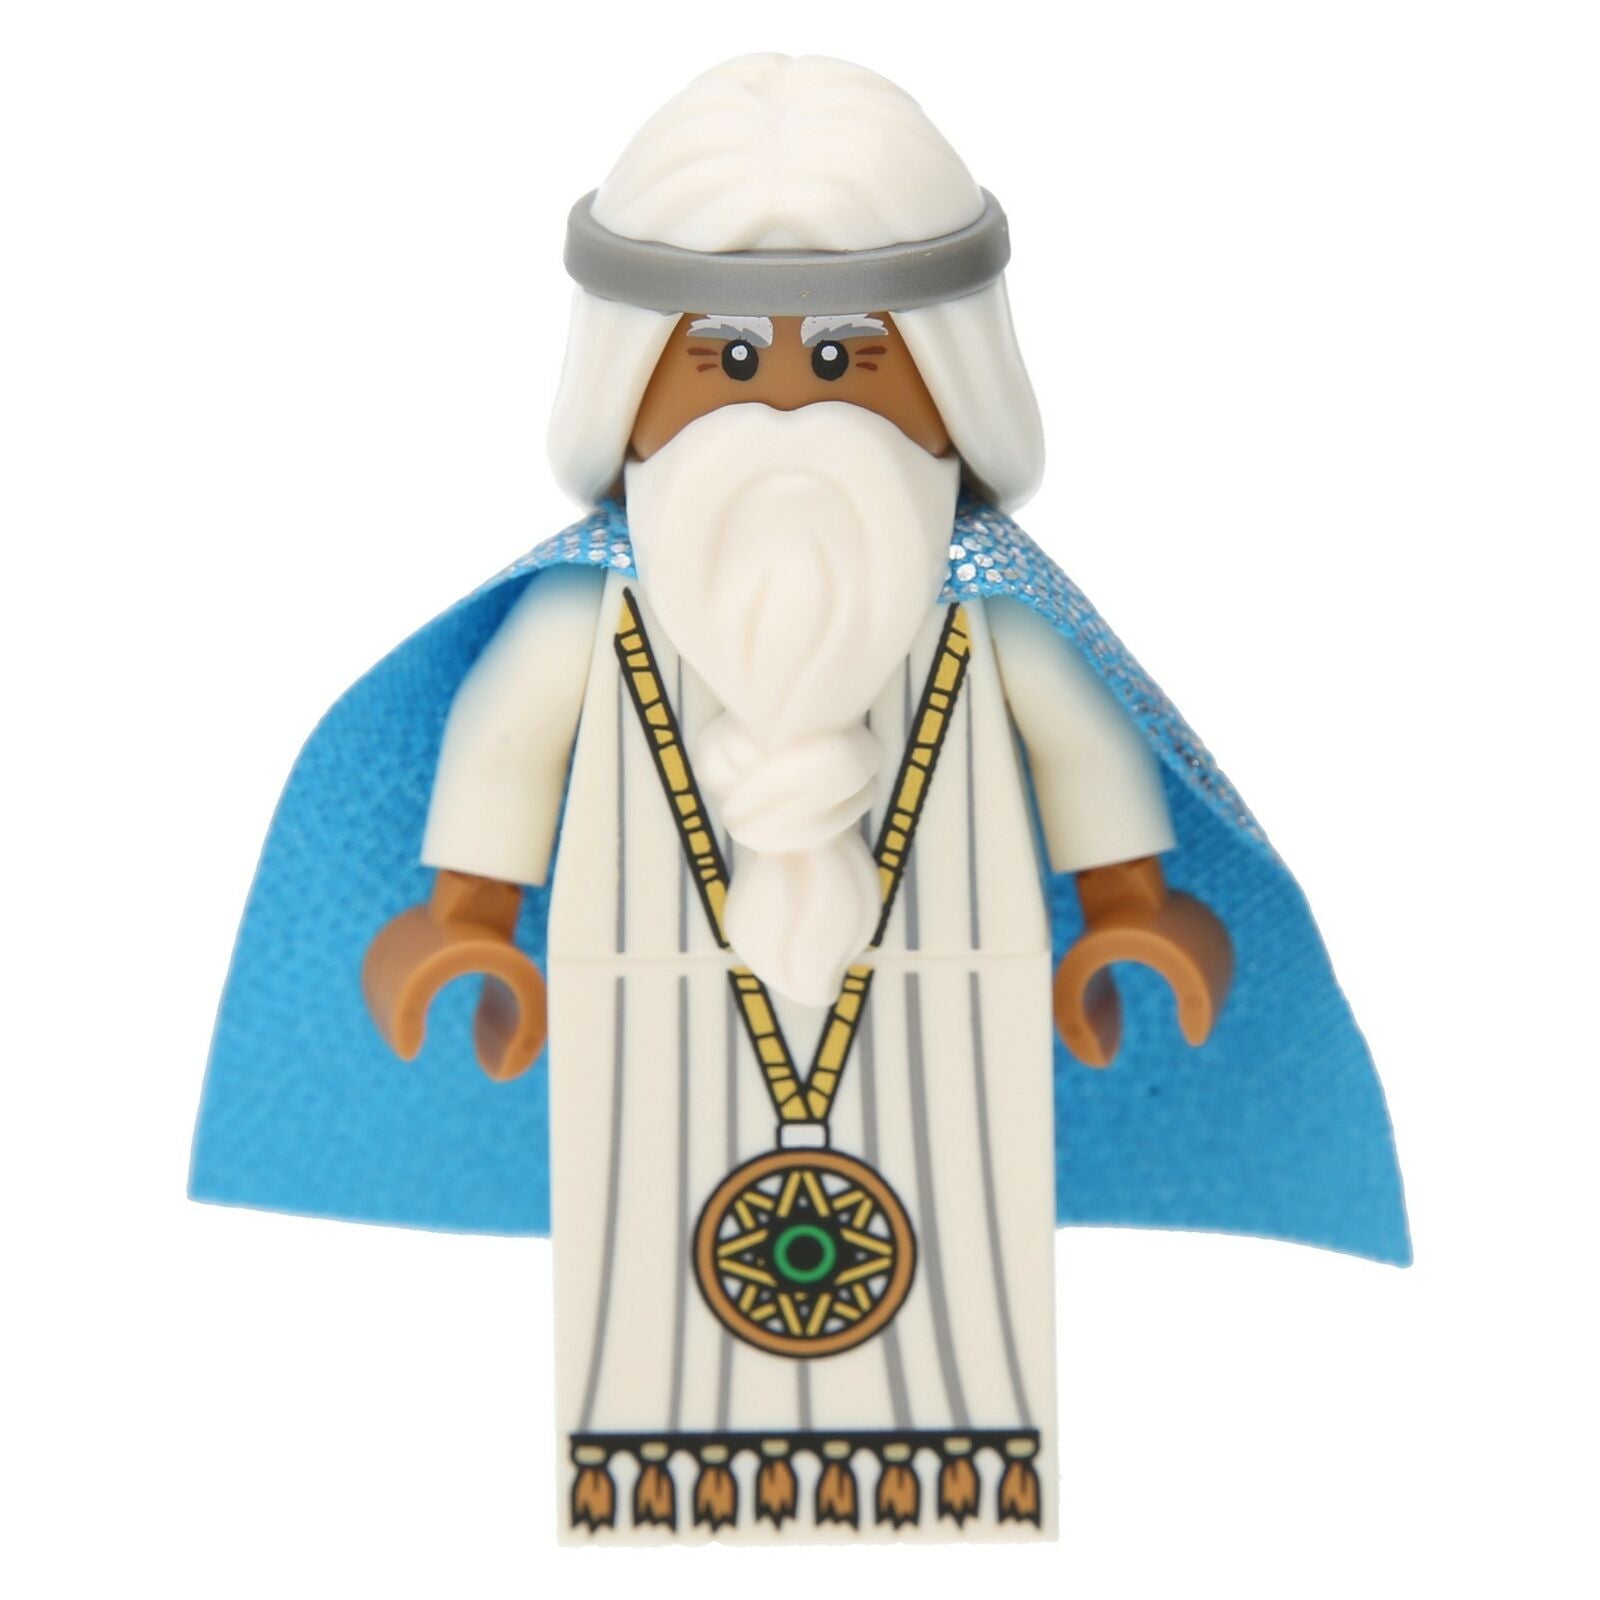 Lego the Lego Movie Minifigur - Vitruvius with a beard and cloak (medallion)